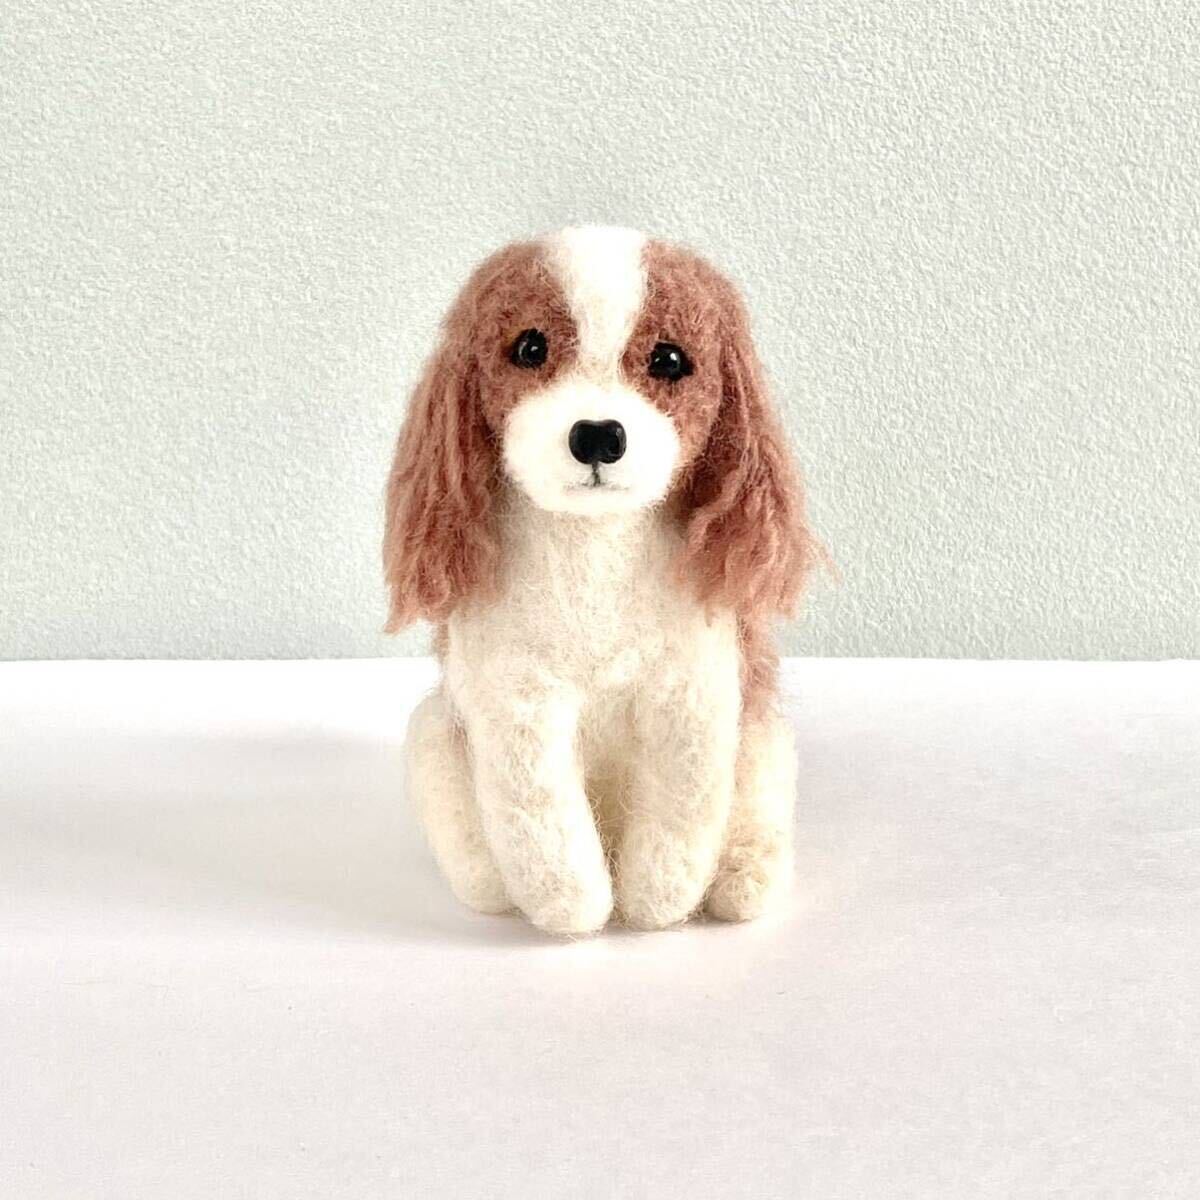 बैठा हुआ कैवेलियर किंग चार्ल्स स्पैनियल हस्तनिर्मित फेल्टेड कुत्ता आलीशान खिलौना, खिलौने, खेल, स्टफ़्ड खिलौना, ऊनी एहसास